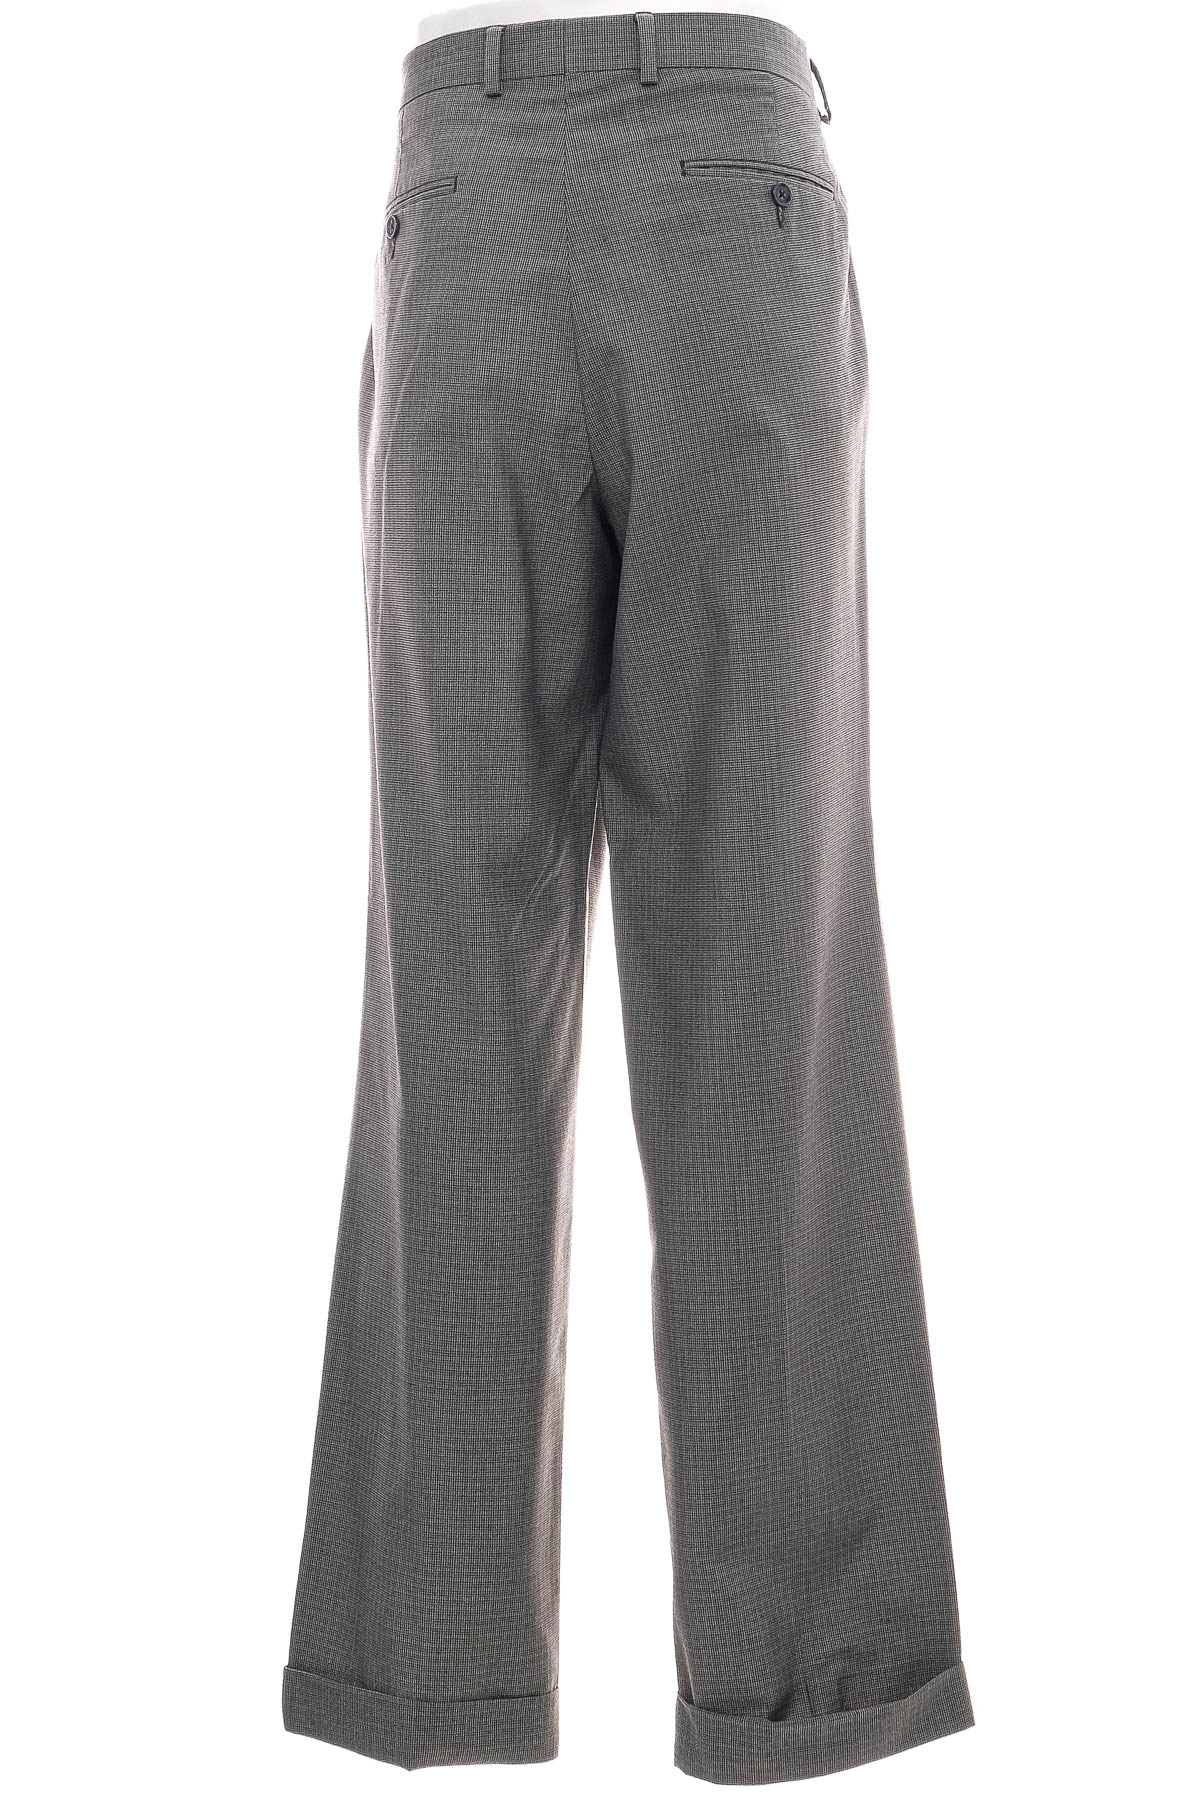 Pantalon pentru bărbați - LAUREN RALPH LAUREN - 1